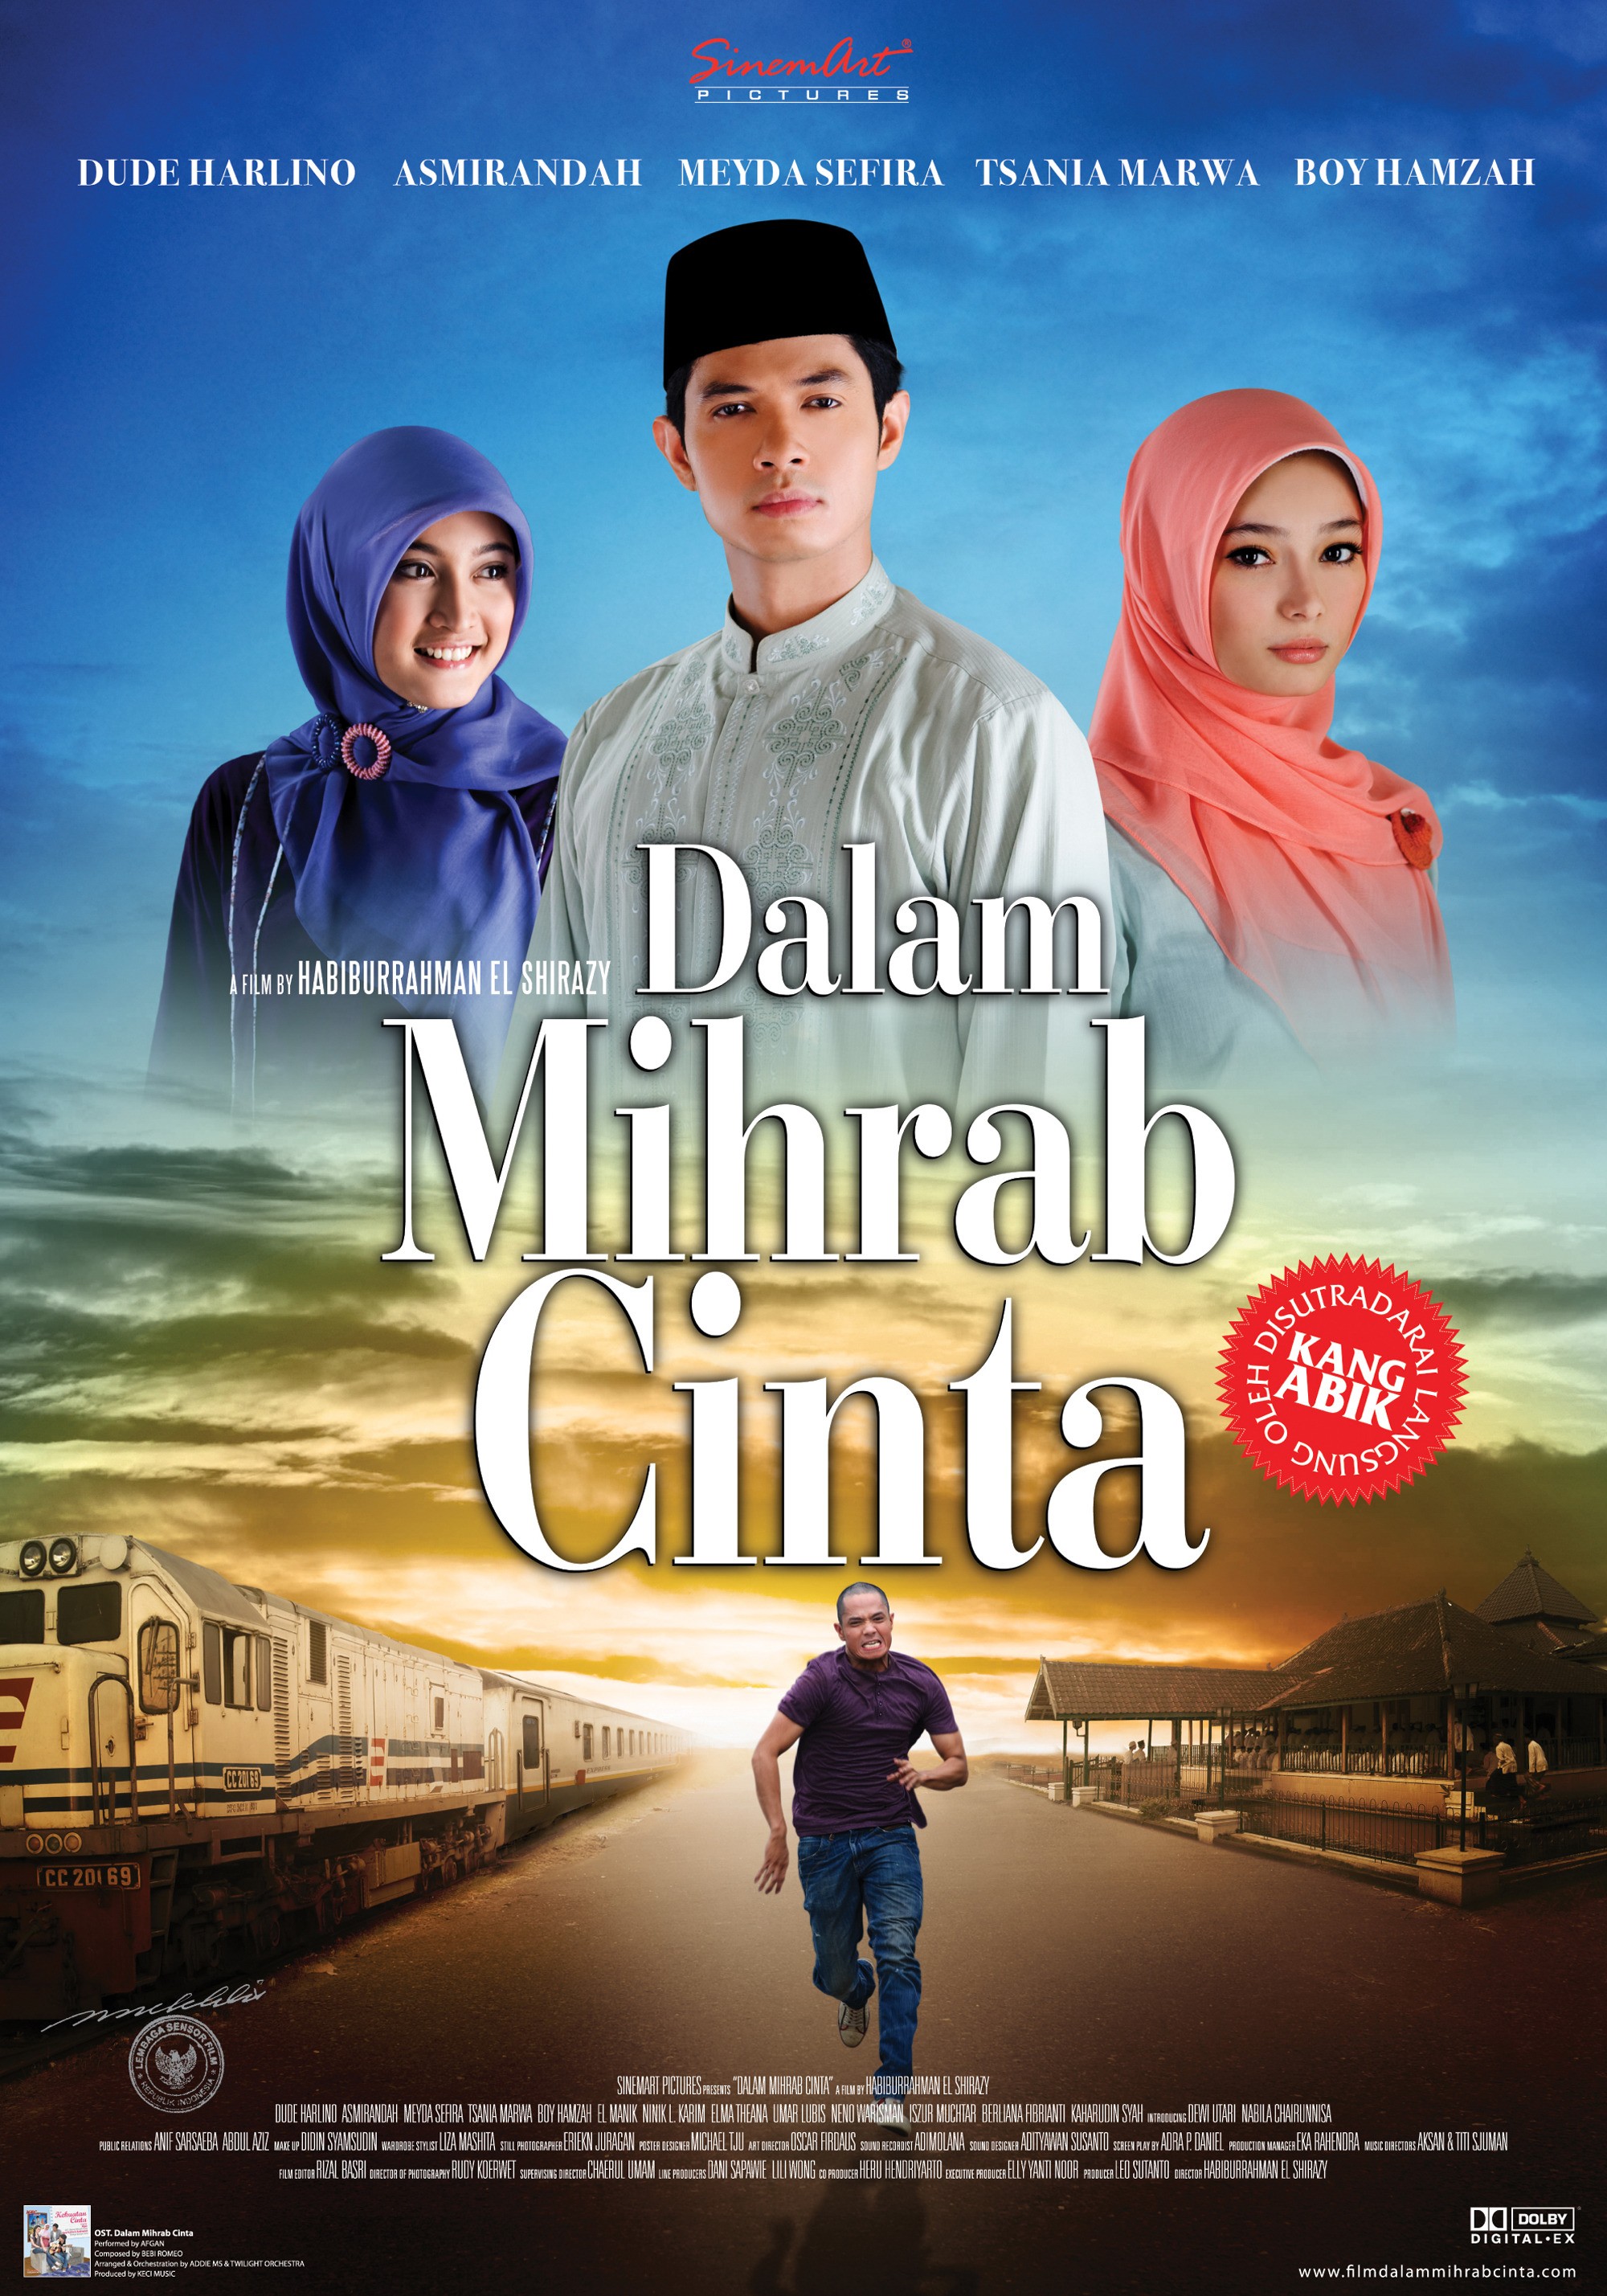 Mega Sized Movie Poster Image for Dalam mihrab cinta (#2 of 2)